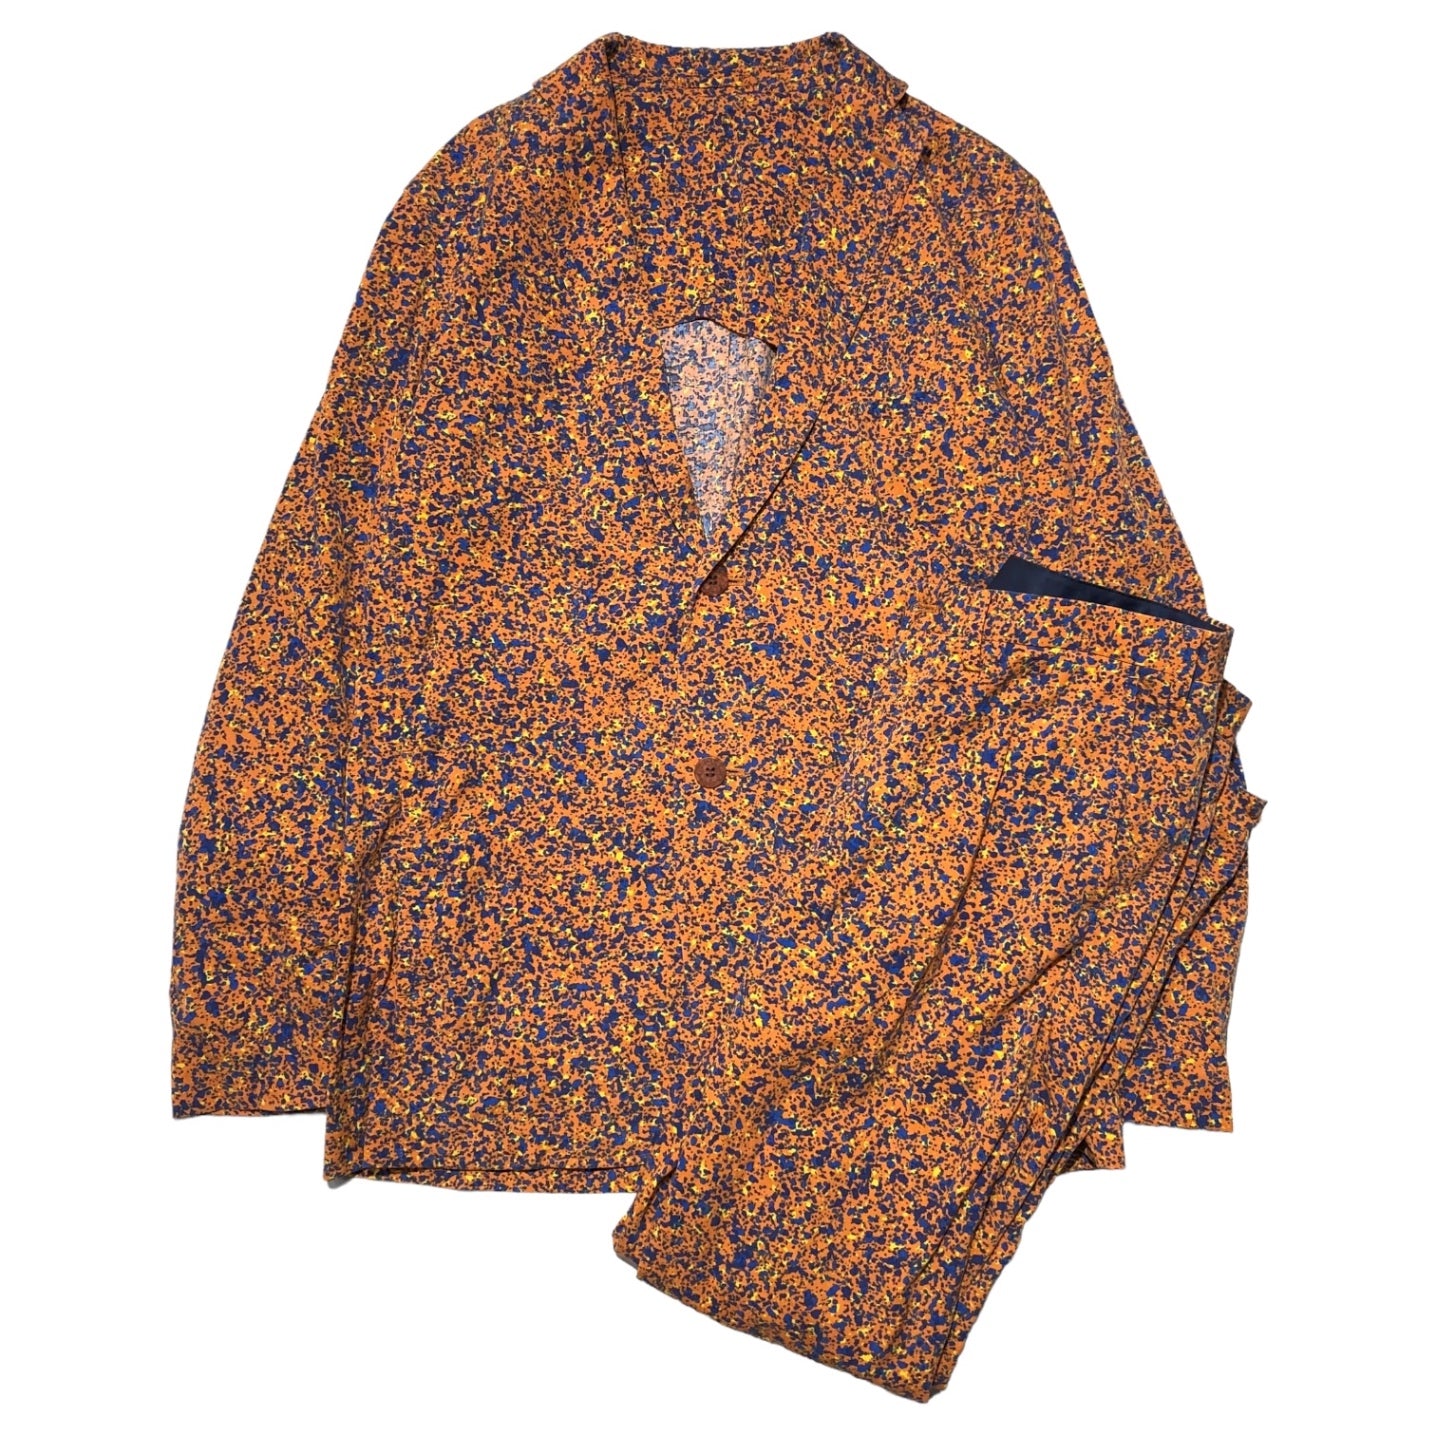 ISSEY MIYAKE MEN(イッセイミヤケメン) 16AW Marble print jacket setup マーブルプリントジャケットセットアップ ME63FD200 ME63FF201 TOP:4(XL) BOTTOM:3(L) オレンジ×ブルー コレクションランウェイ着用品 稀少品